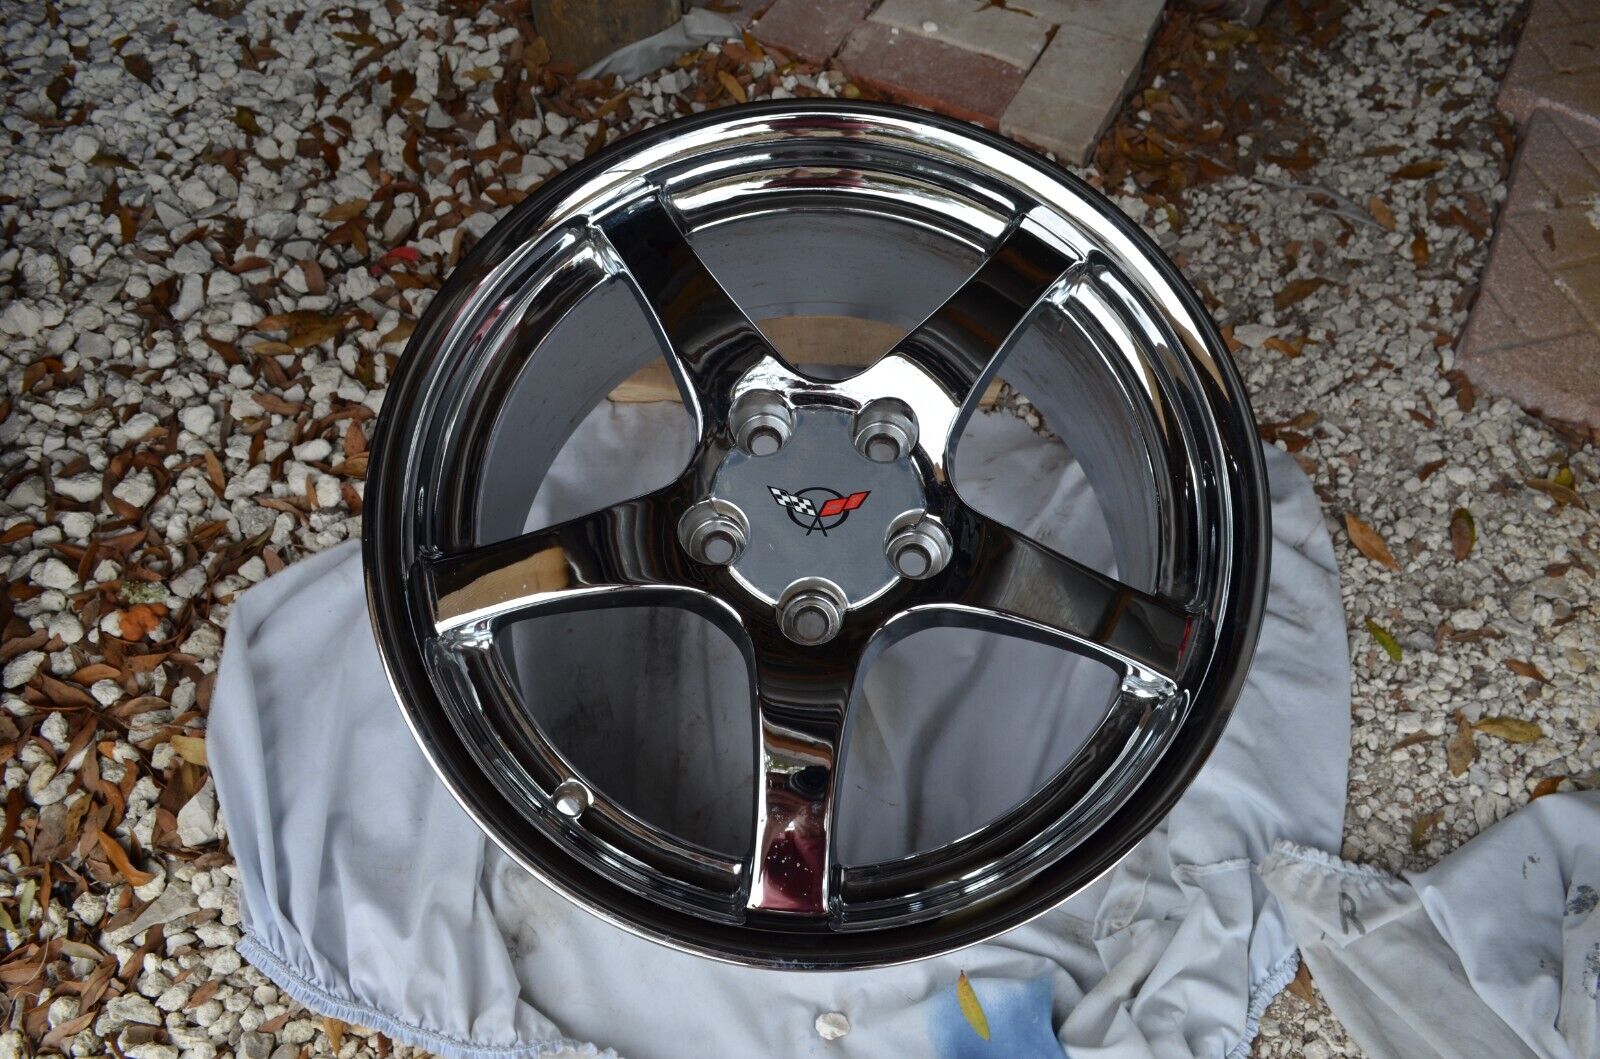 00-04Corvette C5 Aftermarket REAR POLISHED Alum Wheel Rim 18x9.5 out of box cond